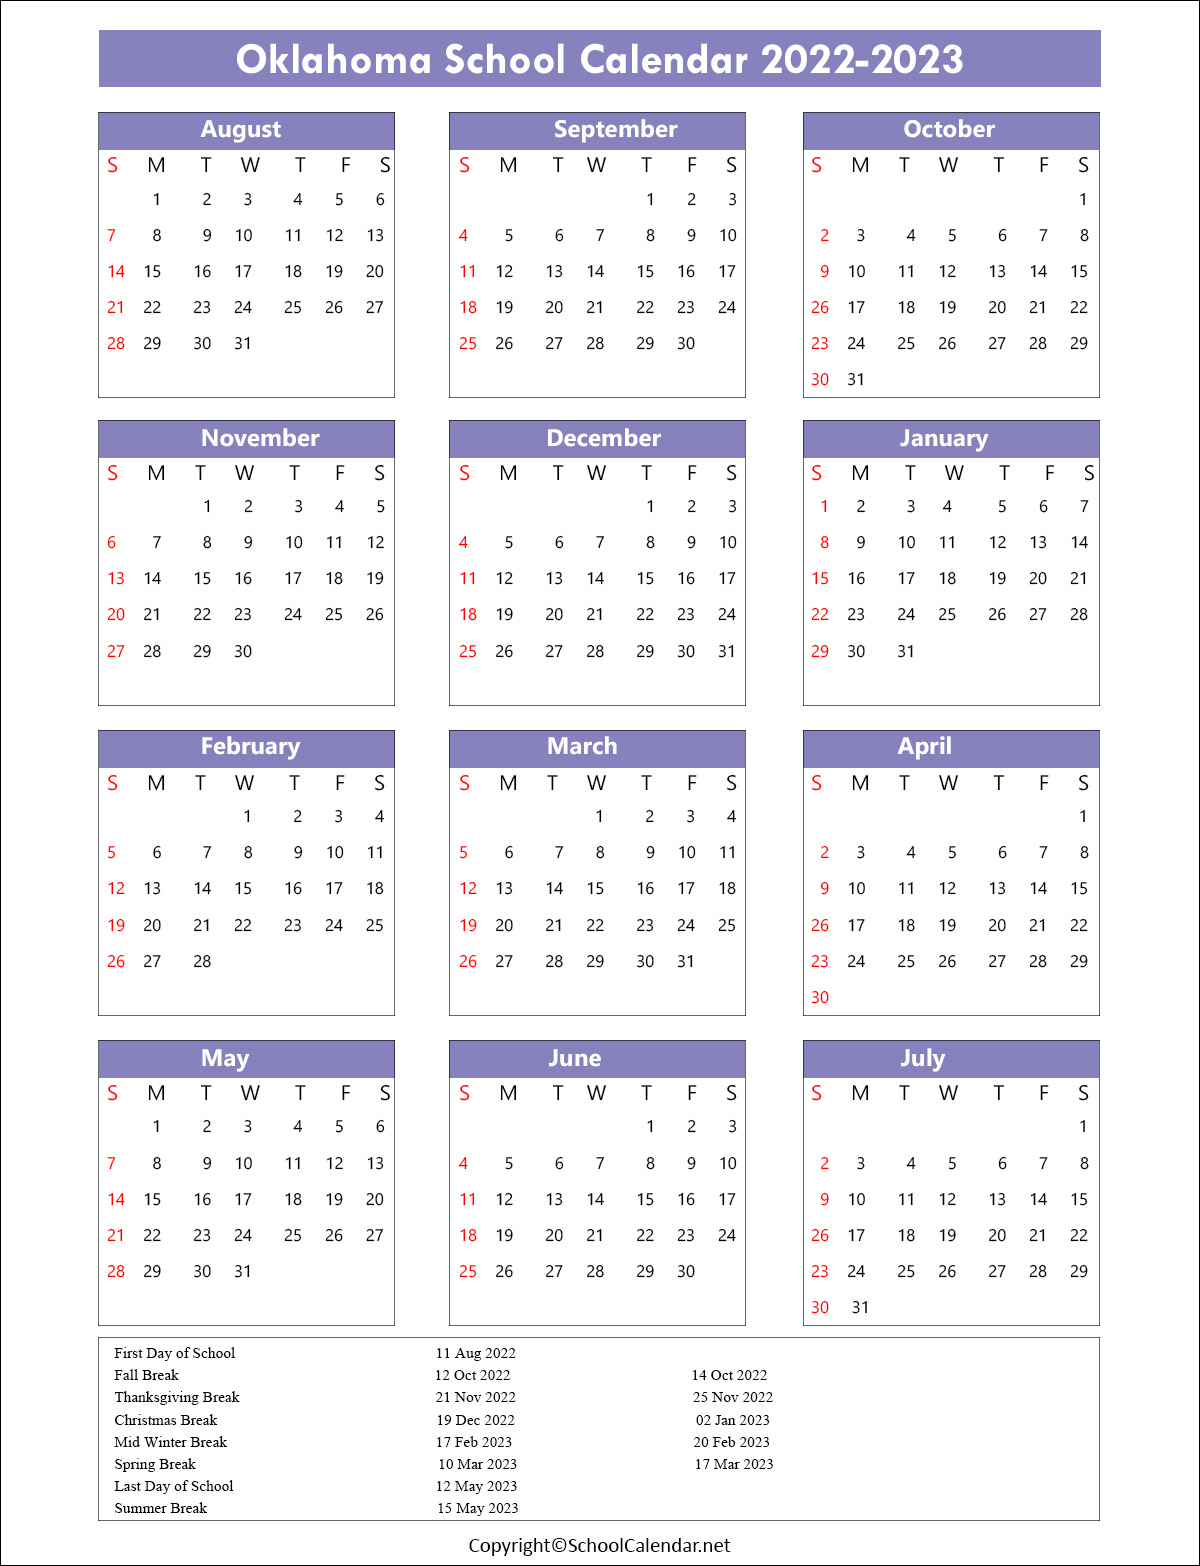 Oklahoma School Calendar 2022